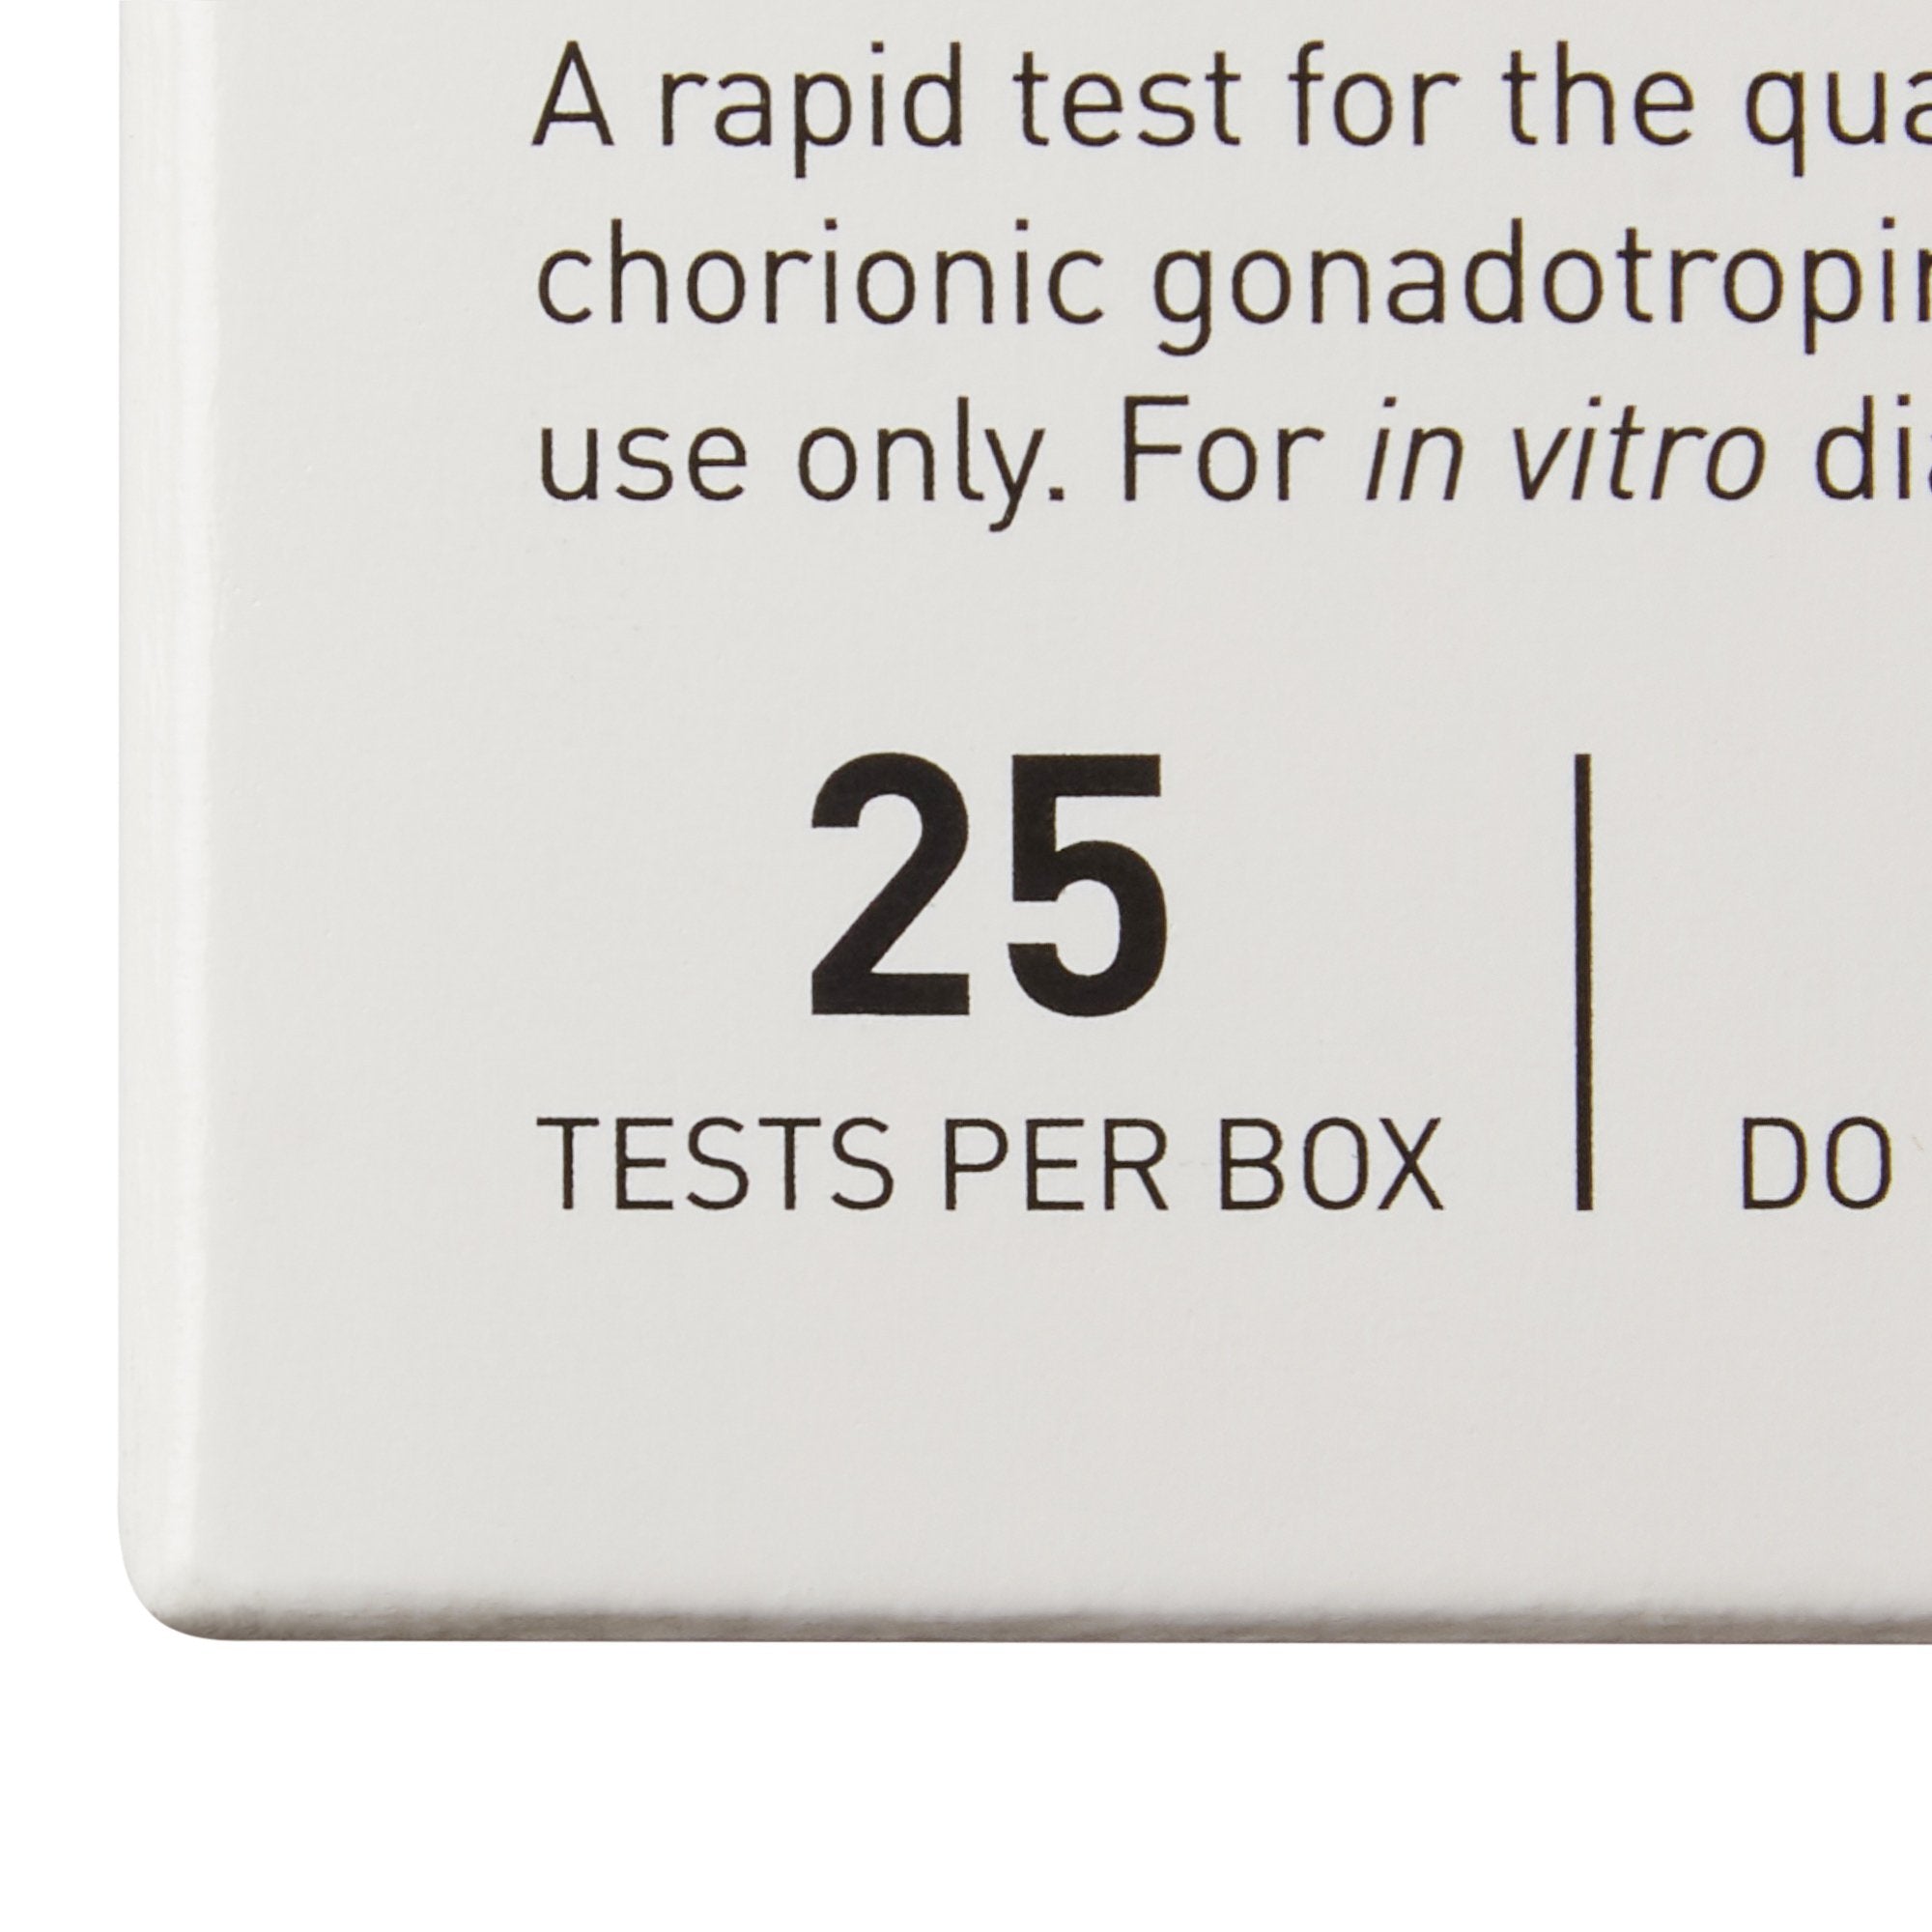 Fertility Test Kit McKesson Consult Fertility Test hCG Pregnancy Test Urine Sample 25 Tests CLIA Waived